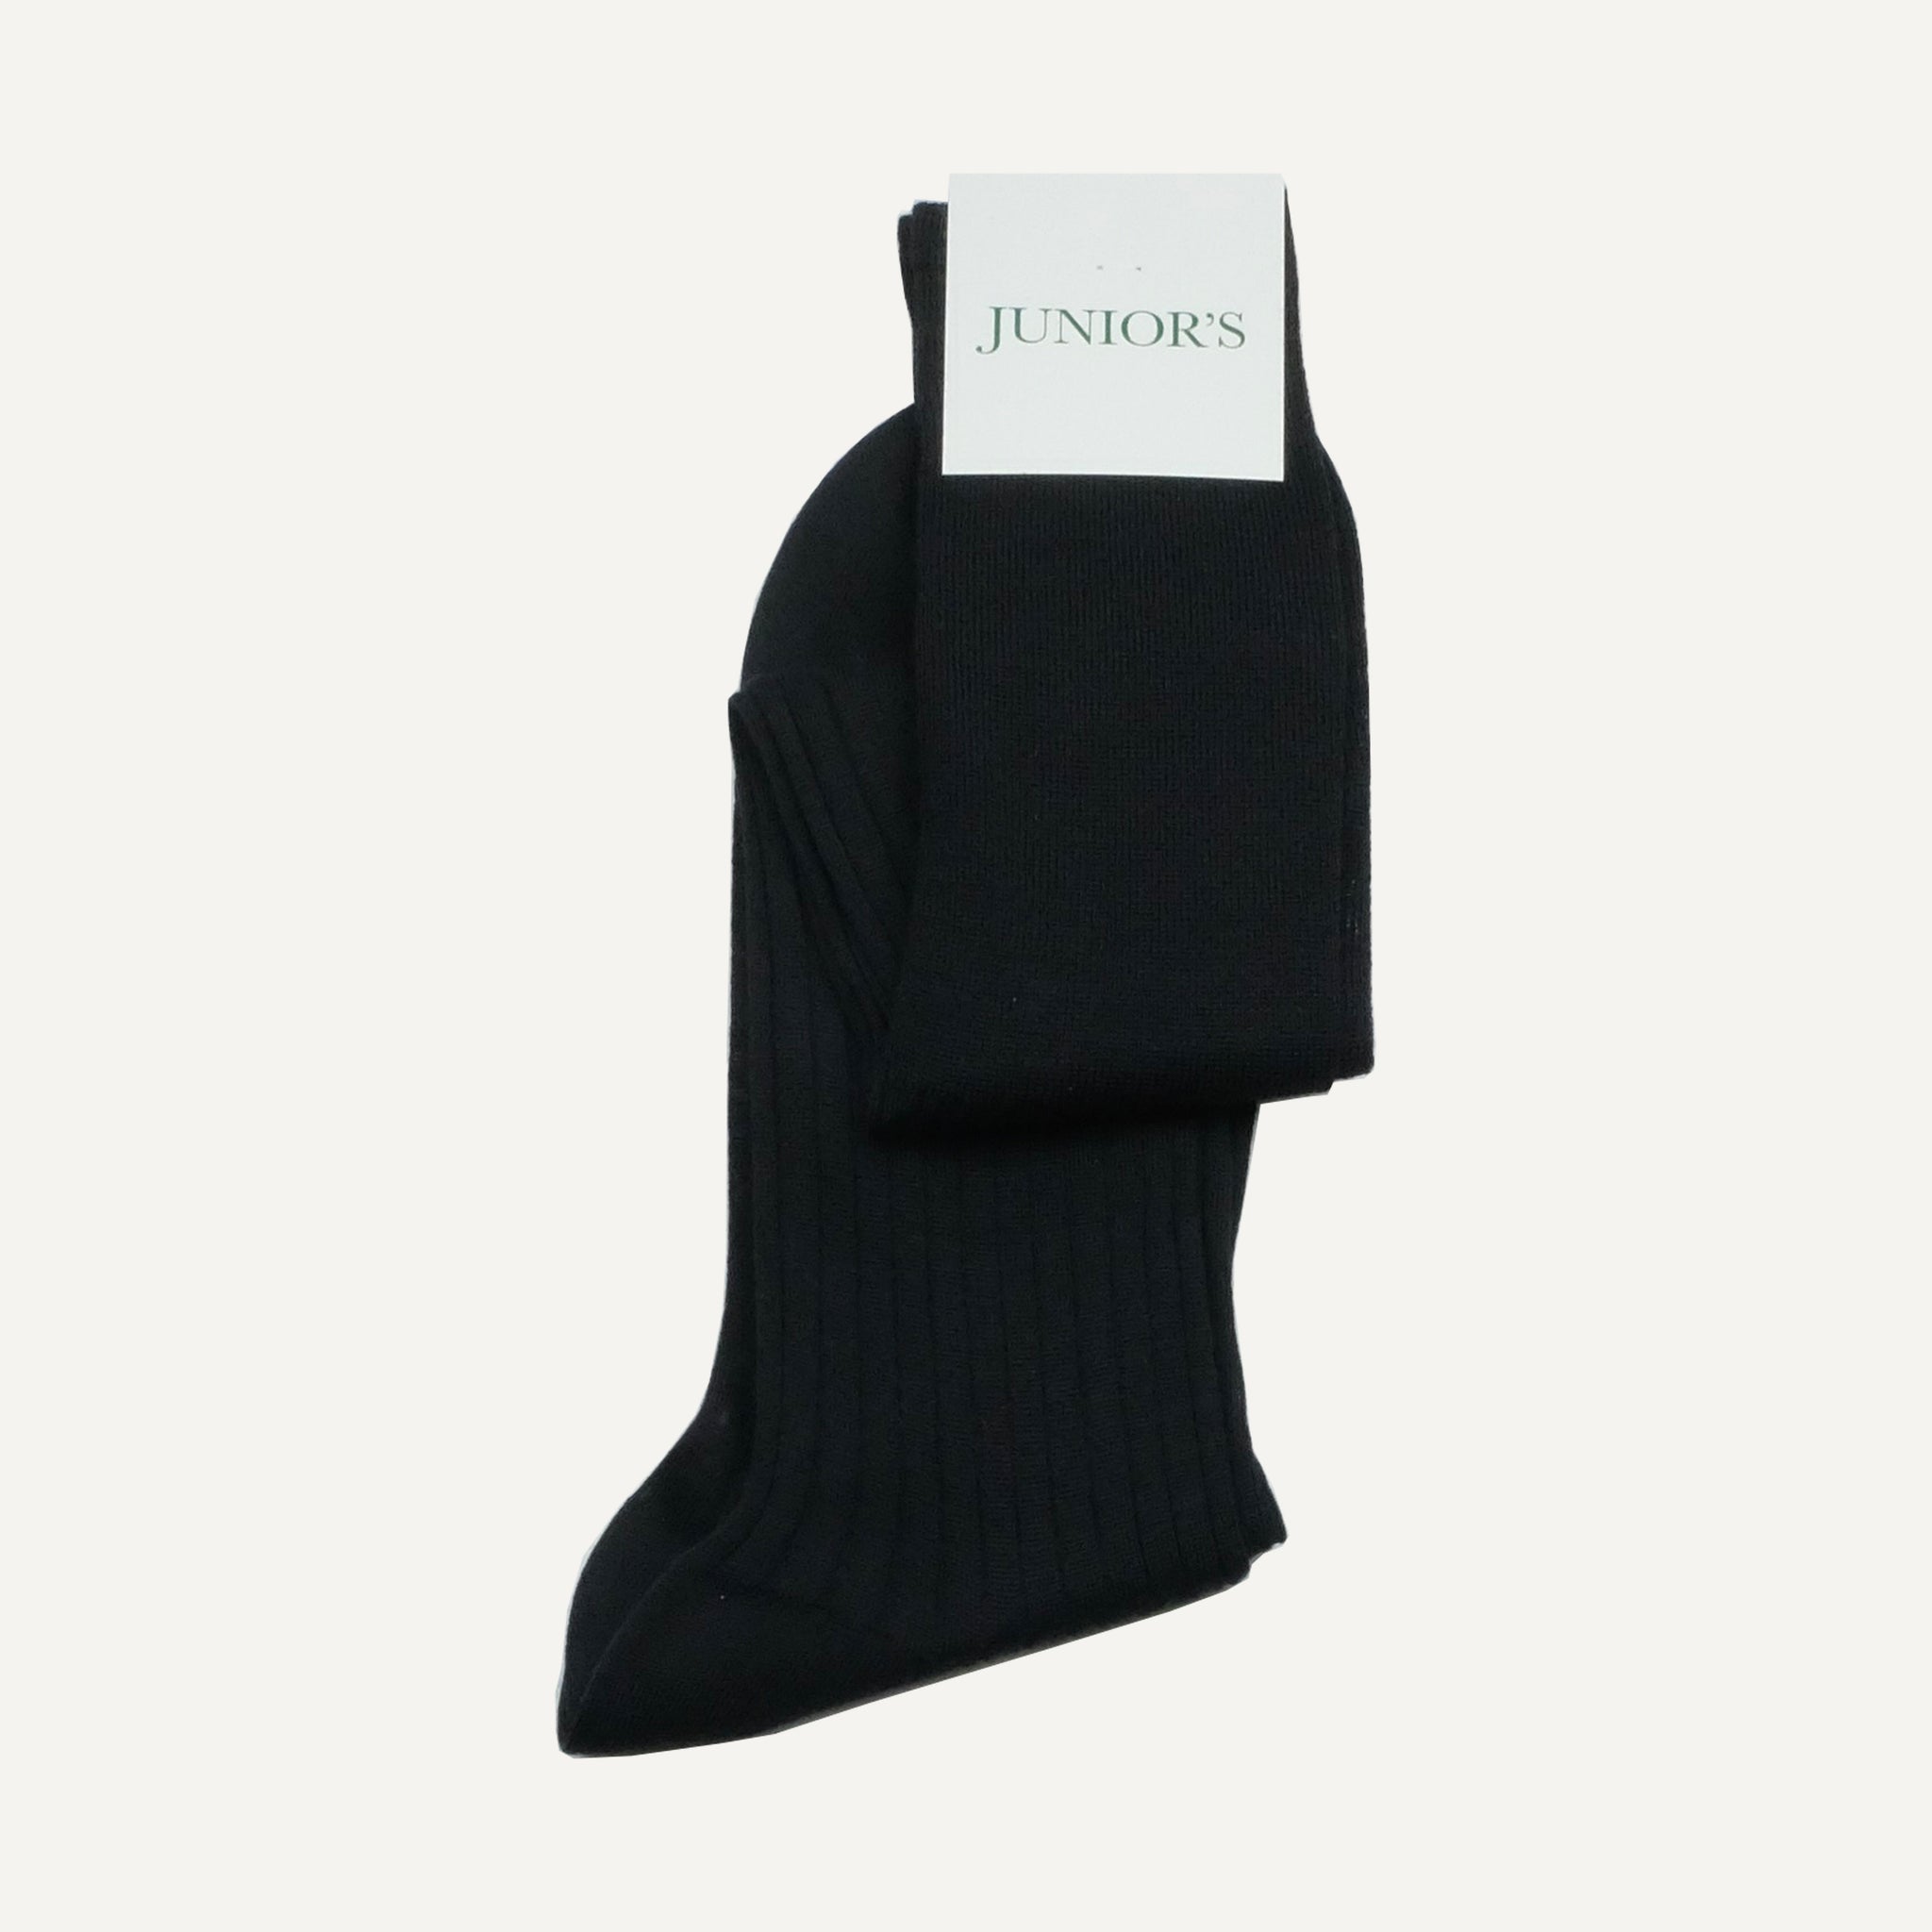 Black Over-the-Calf Sock - Junior's